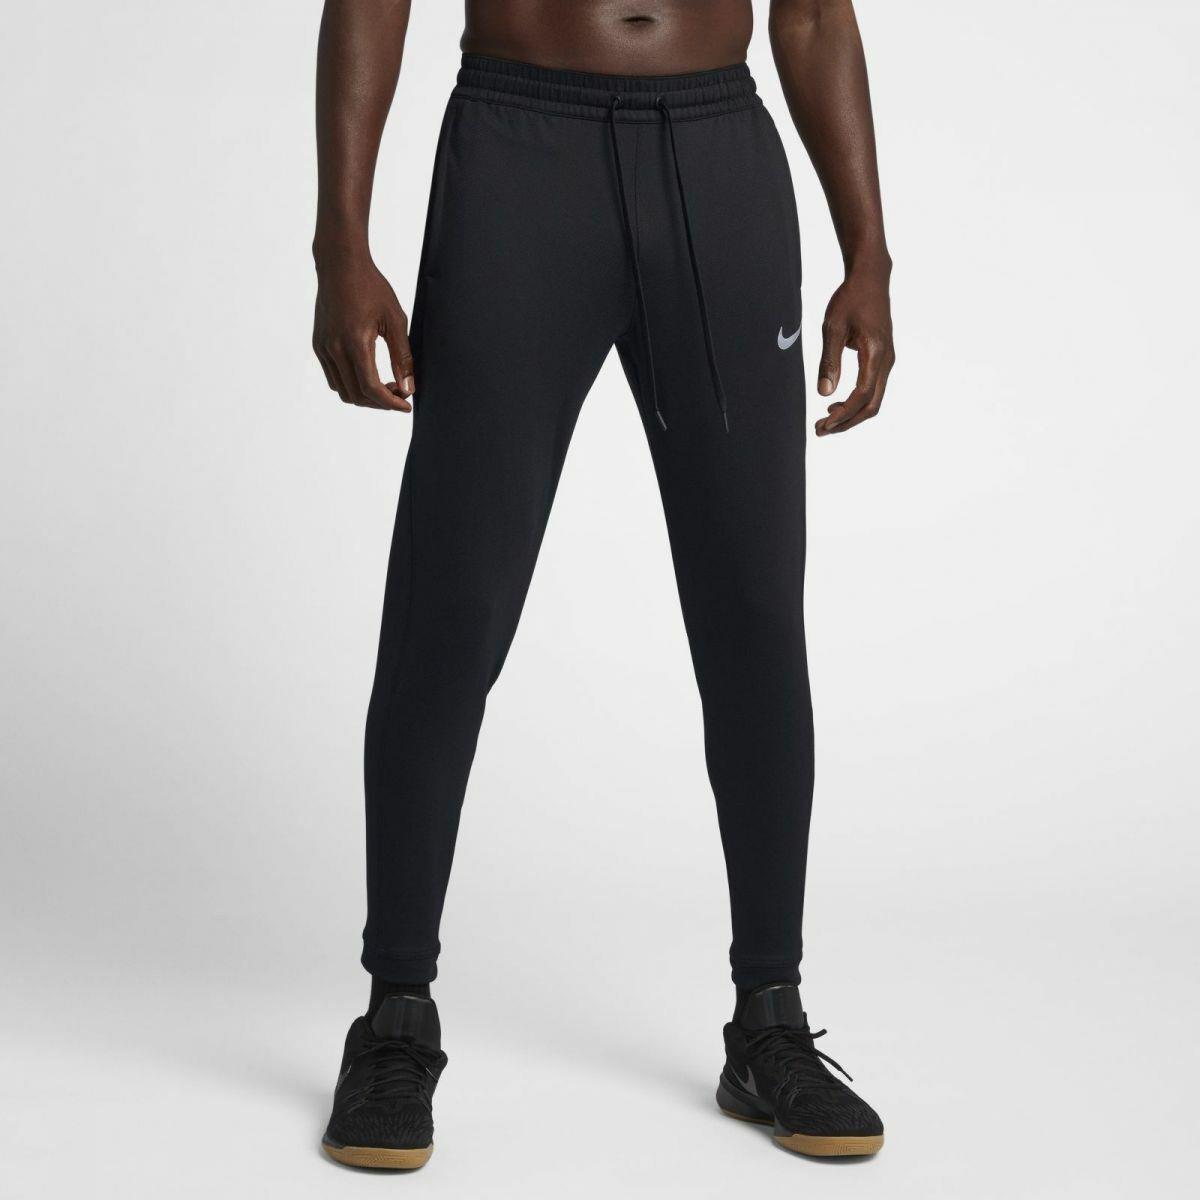 Nike Therma Flex Showtime Black Basketball Training Pants AJ0994 010 Medium